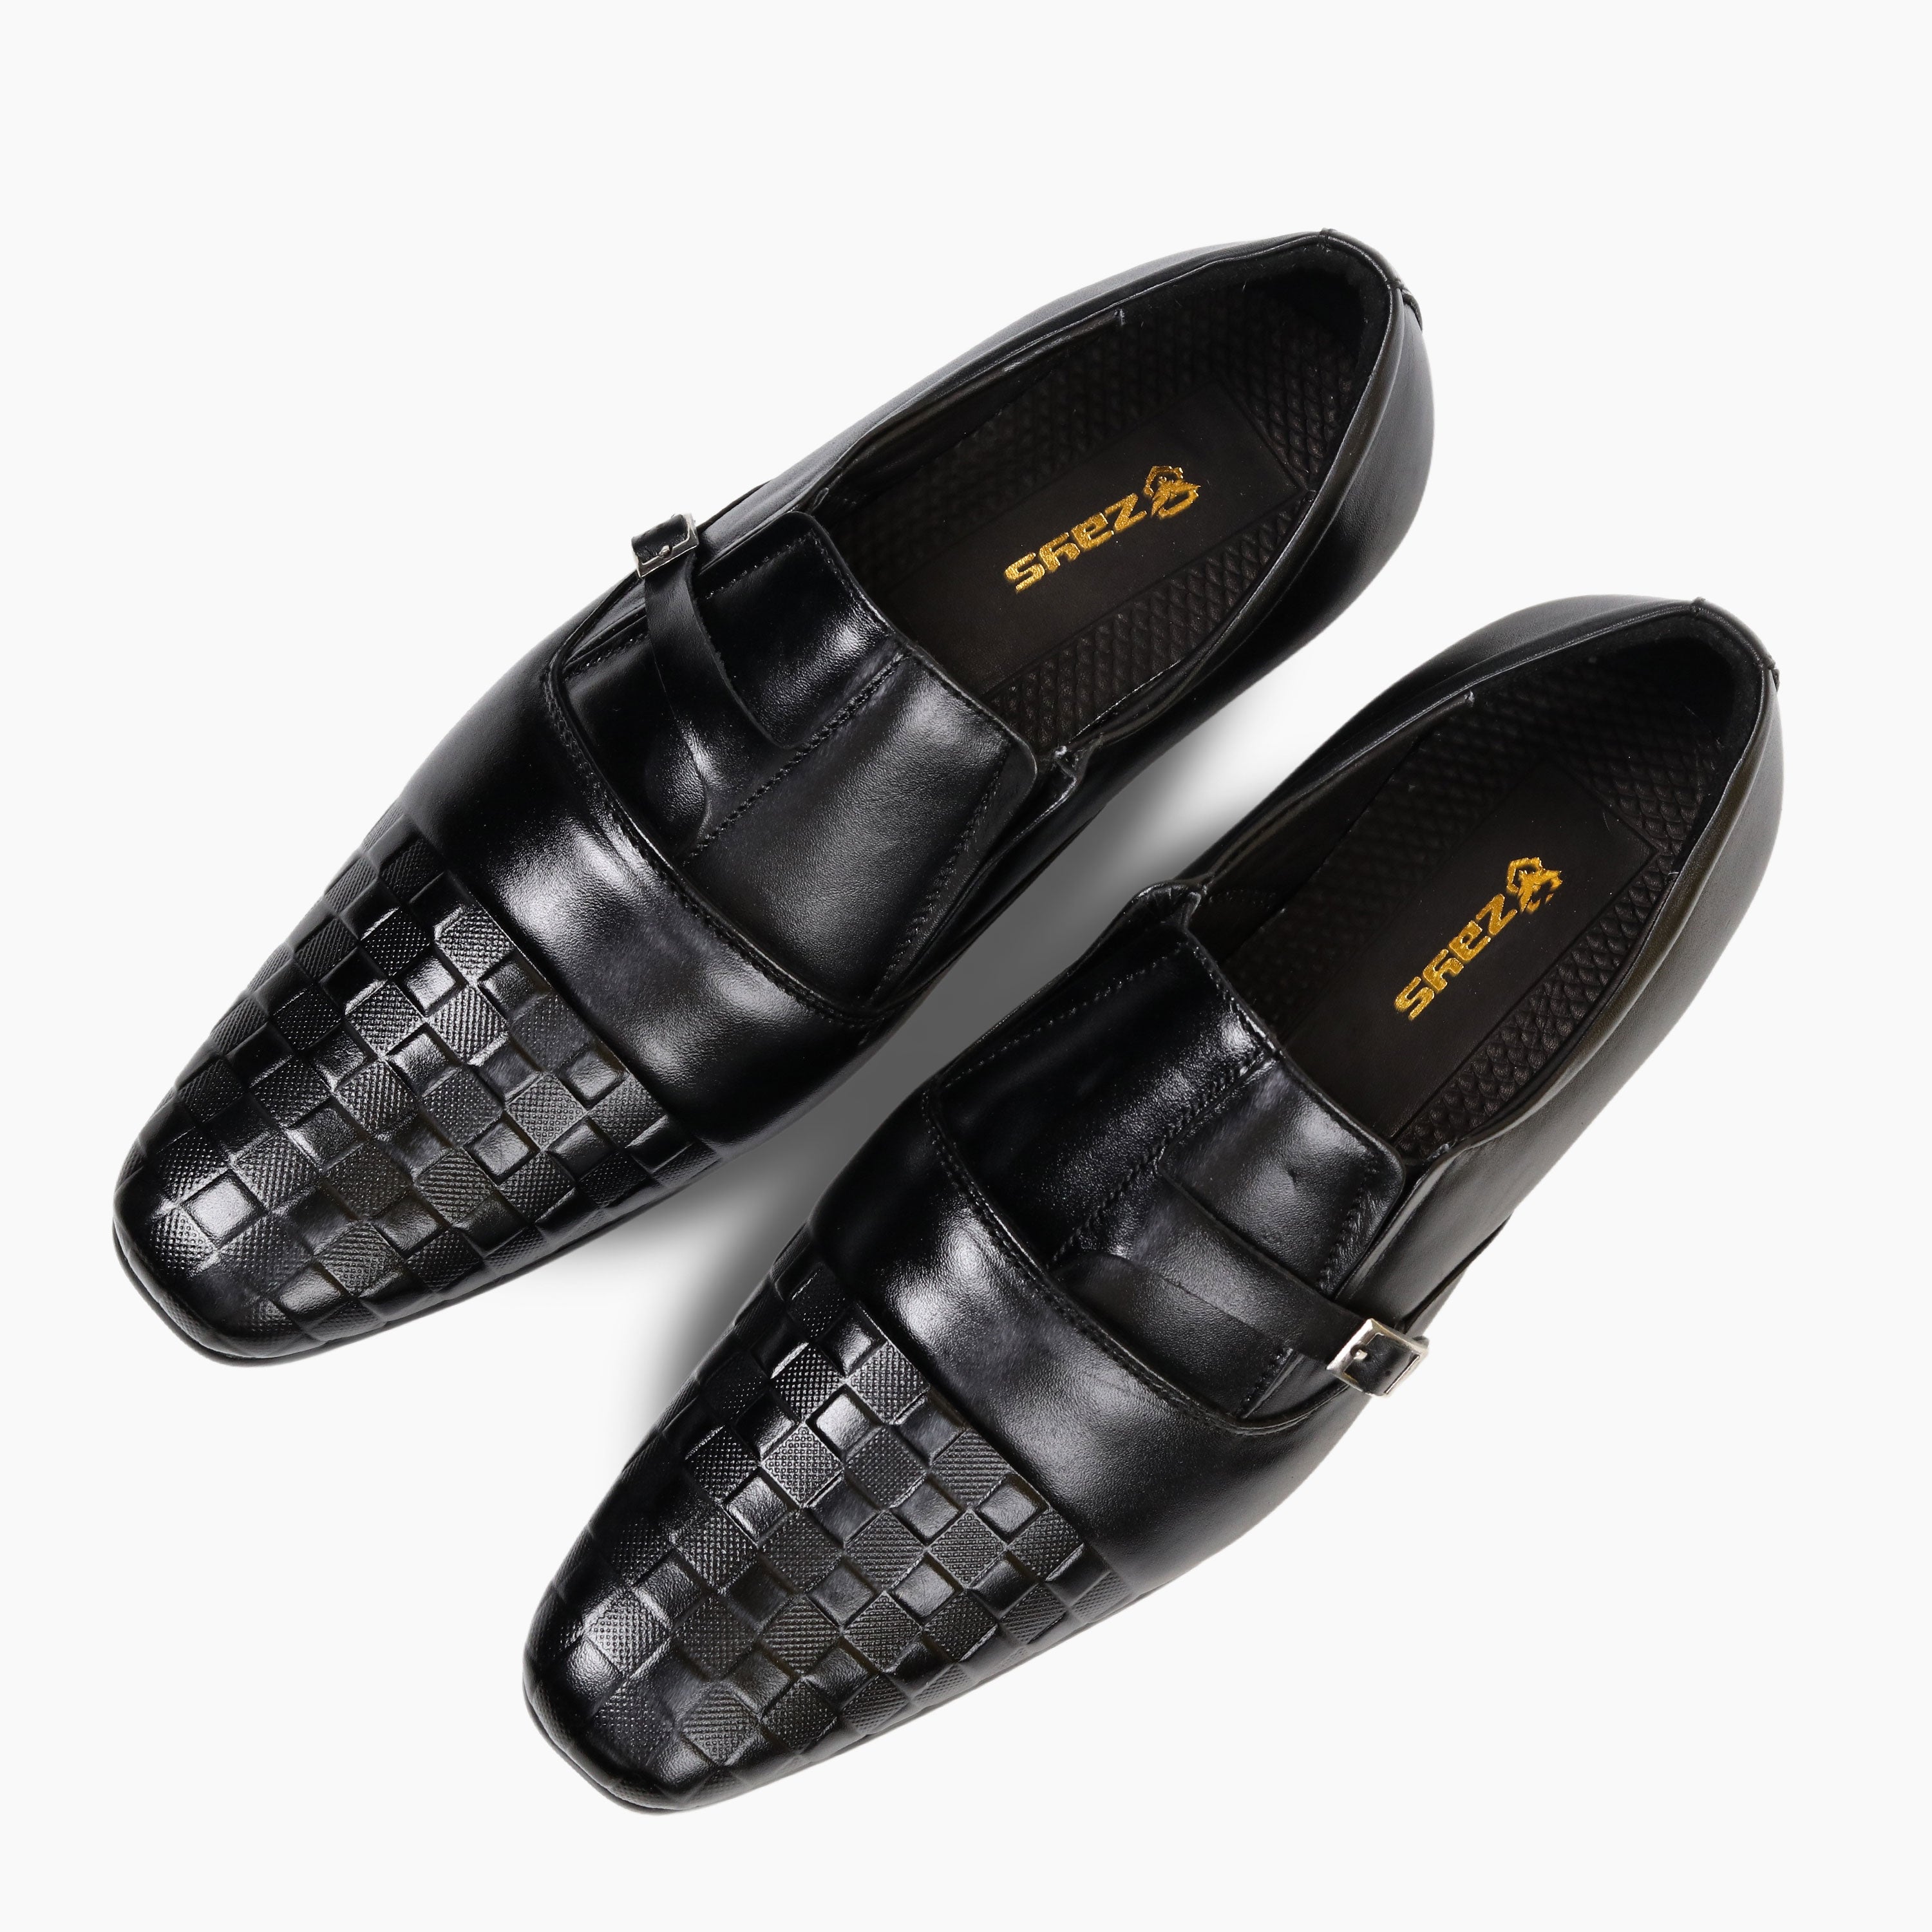 Zays Leather Premium Formal Shoe For Men (Black) - ZAYSSF01